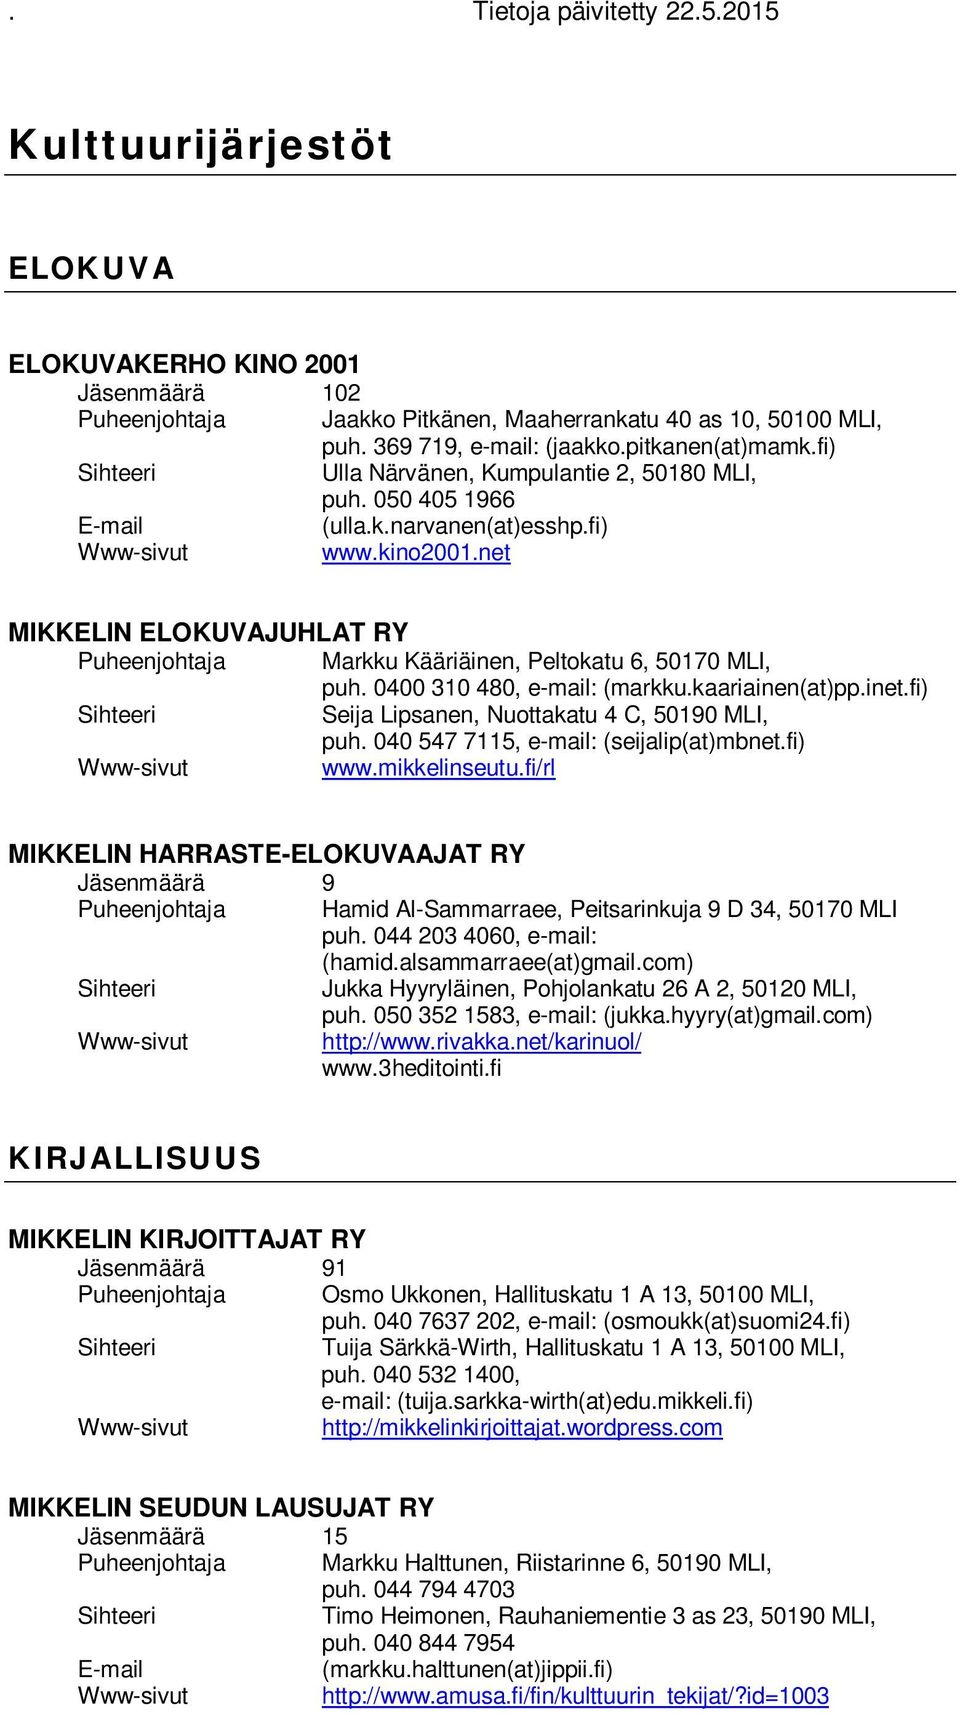 0400 310 480, e-mail: (markku.kaariainen(at)pp.inet.fi) Seija Lipsanen, Nuottakatu 4 C, 50190 MLI, puh. 040 547 7115, e-mail: (seijalip(at)mbnet.fi) www.mikkelinseutu.